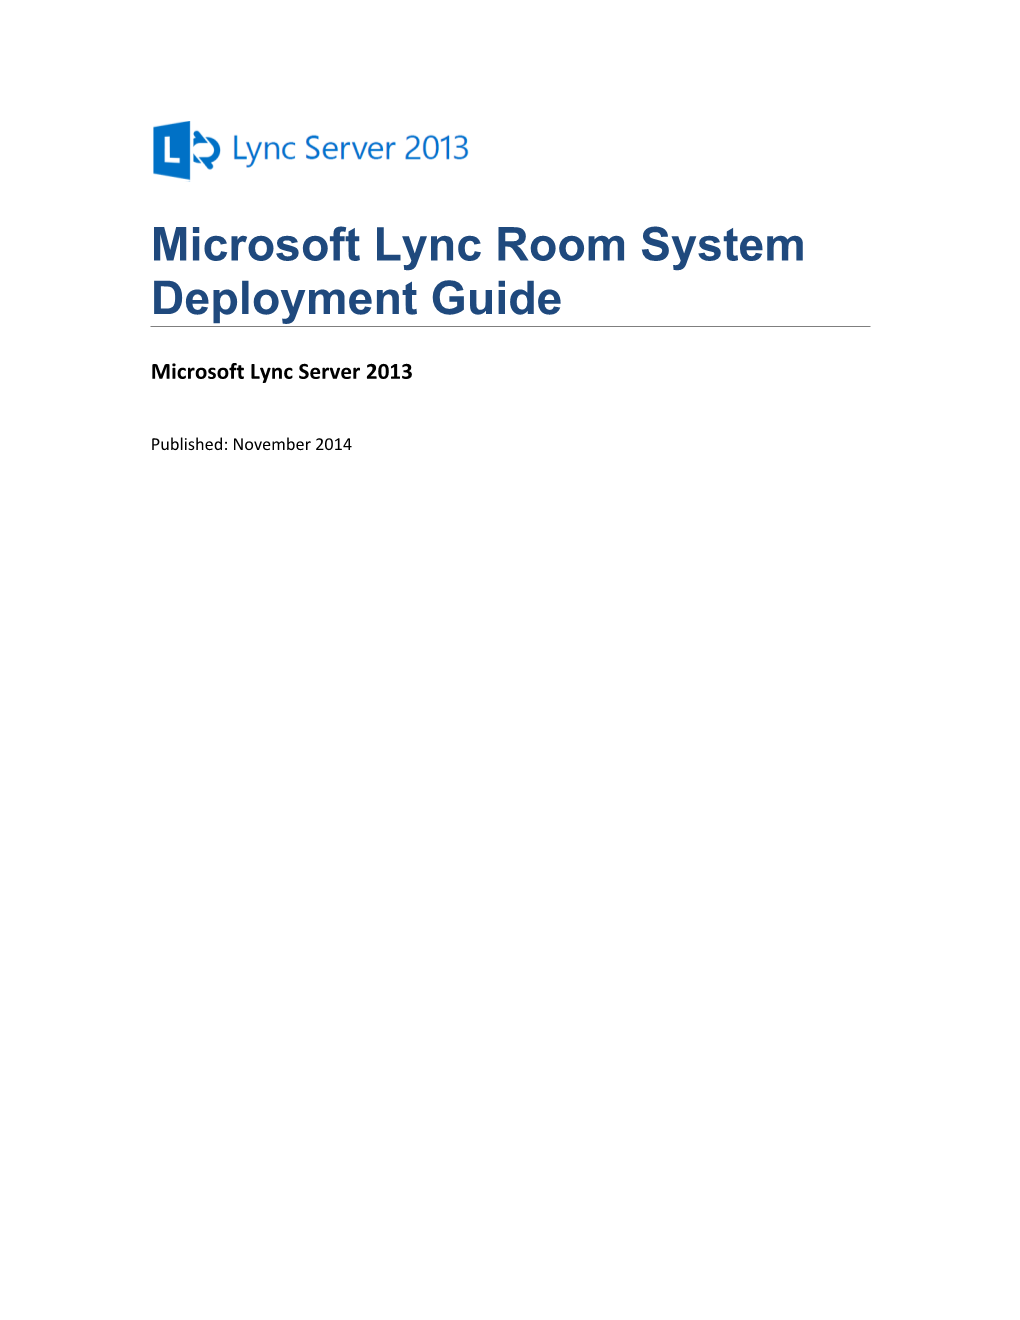 Microsoft Lync Room System Deployment Guide